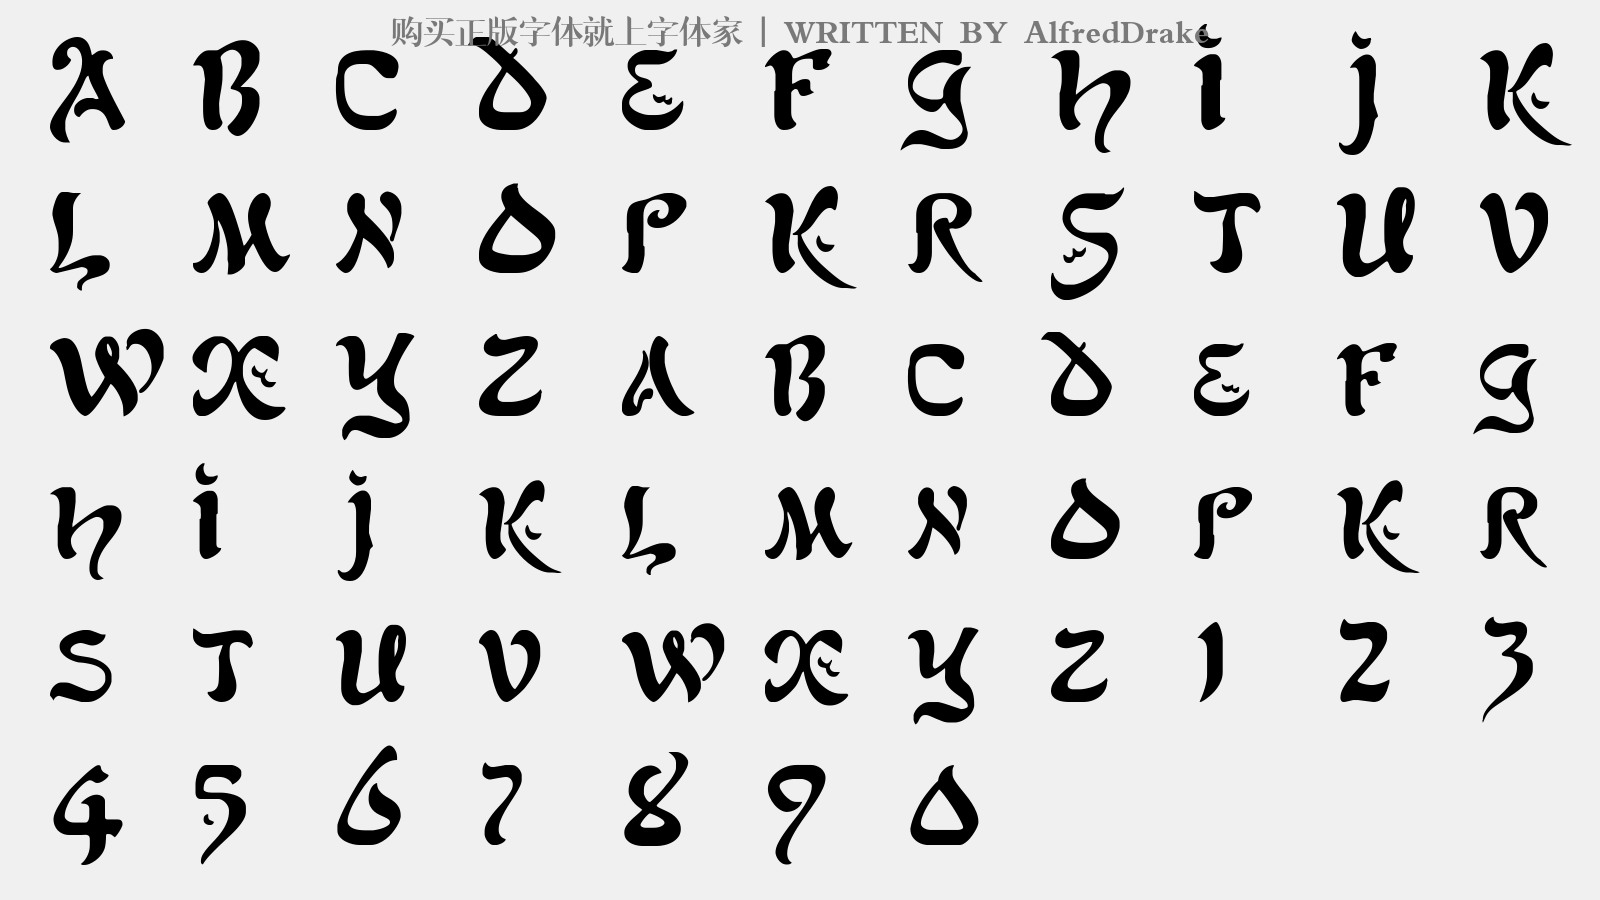 AlfredDrake - 大写字母/小写字母/数字